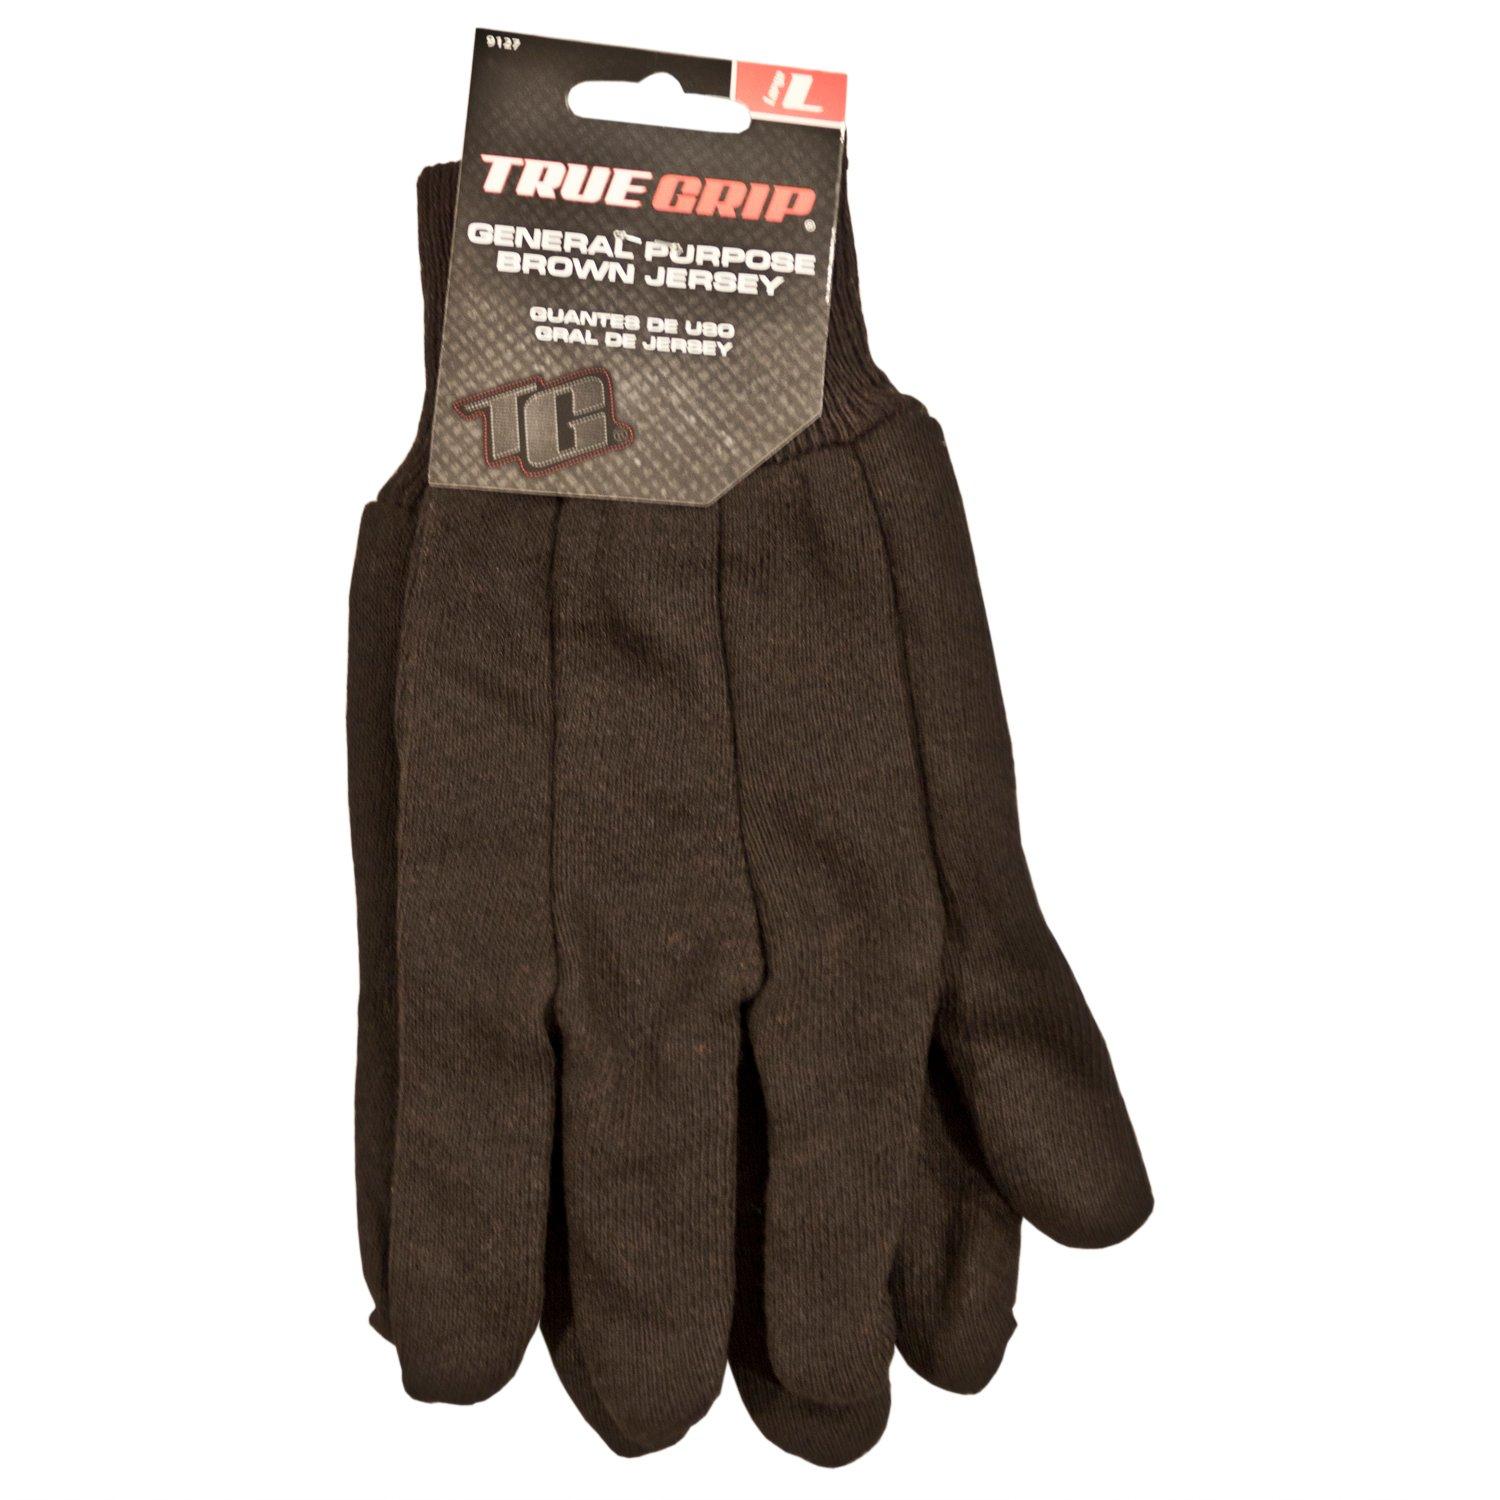 True Grip General Purpose Brown Jersey Gloves